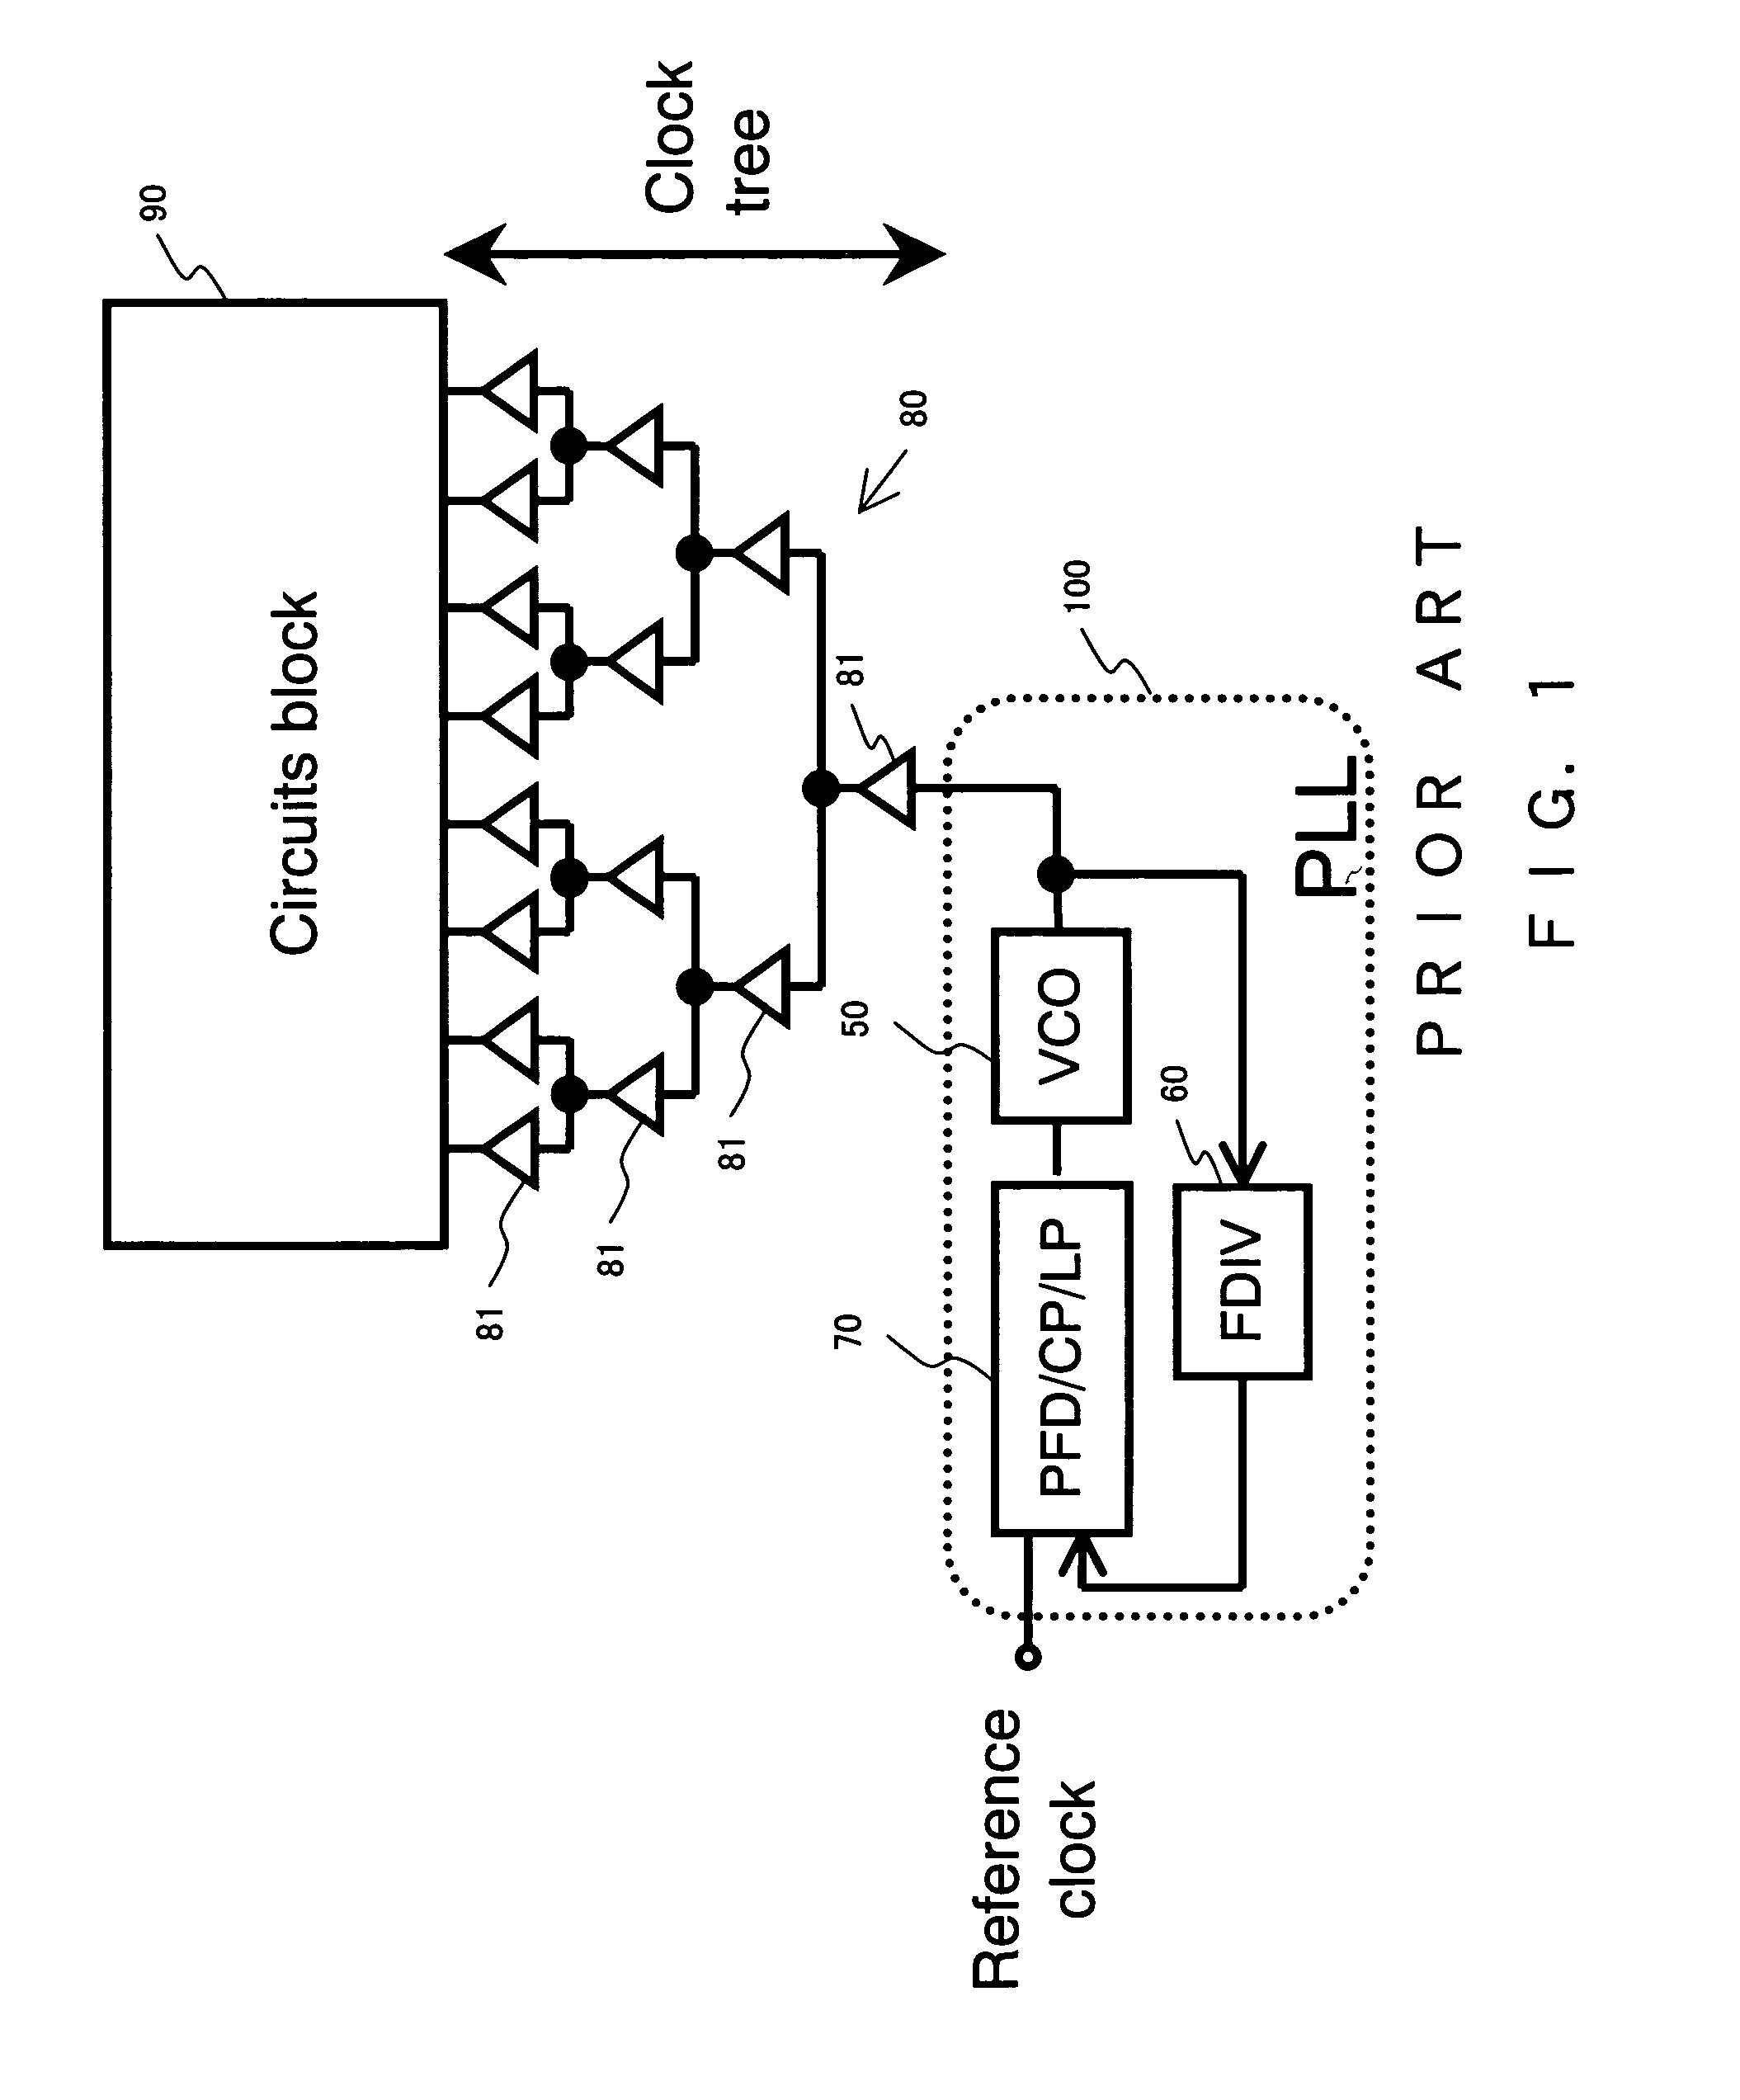 Clock signal generating and distributing apparatus